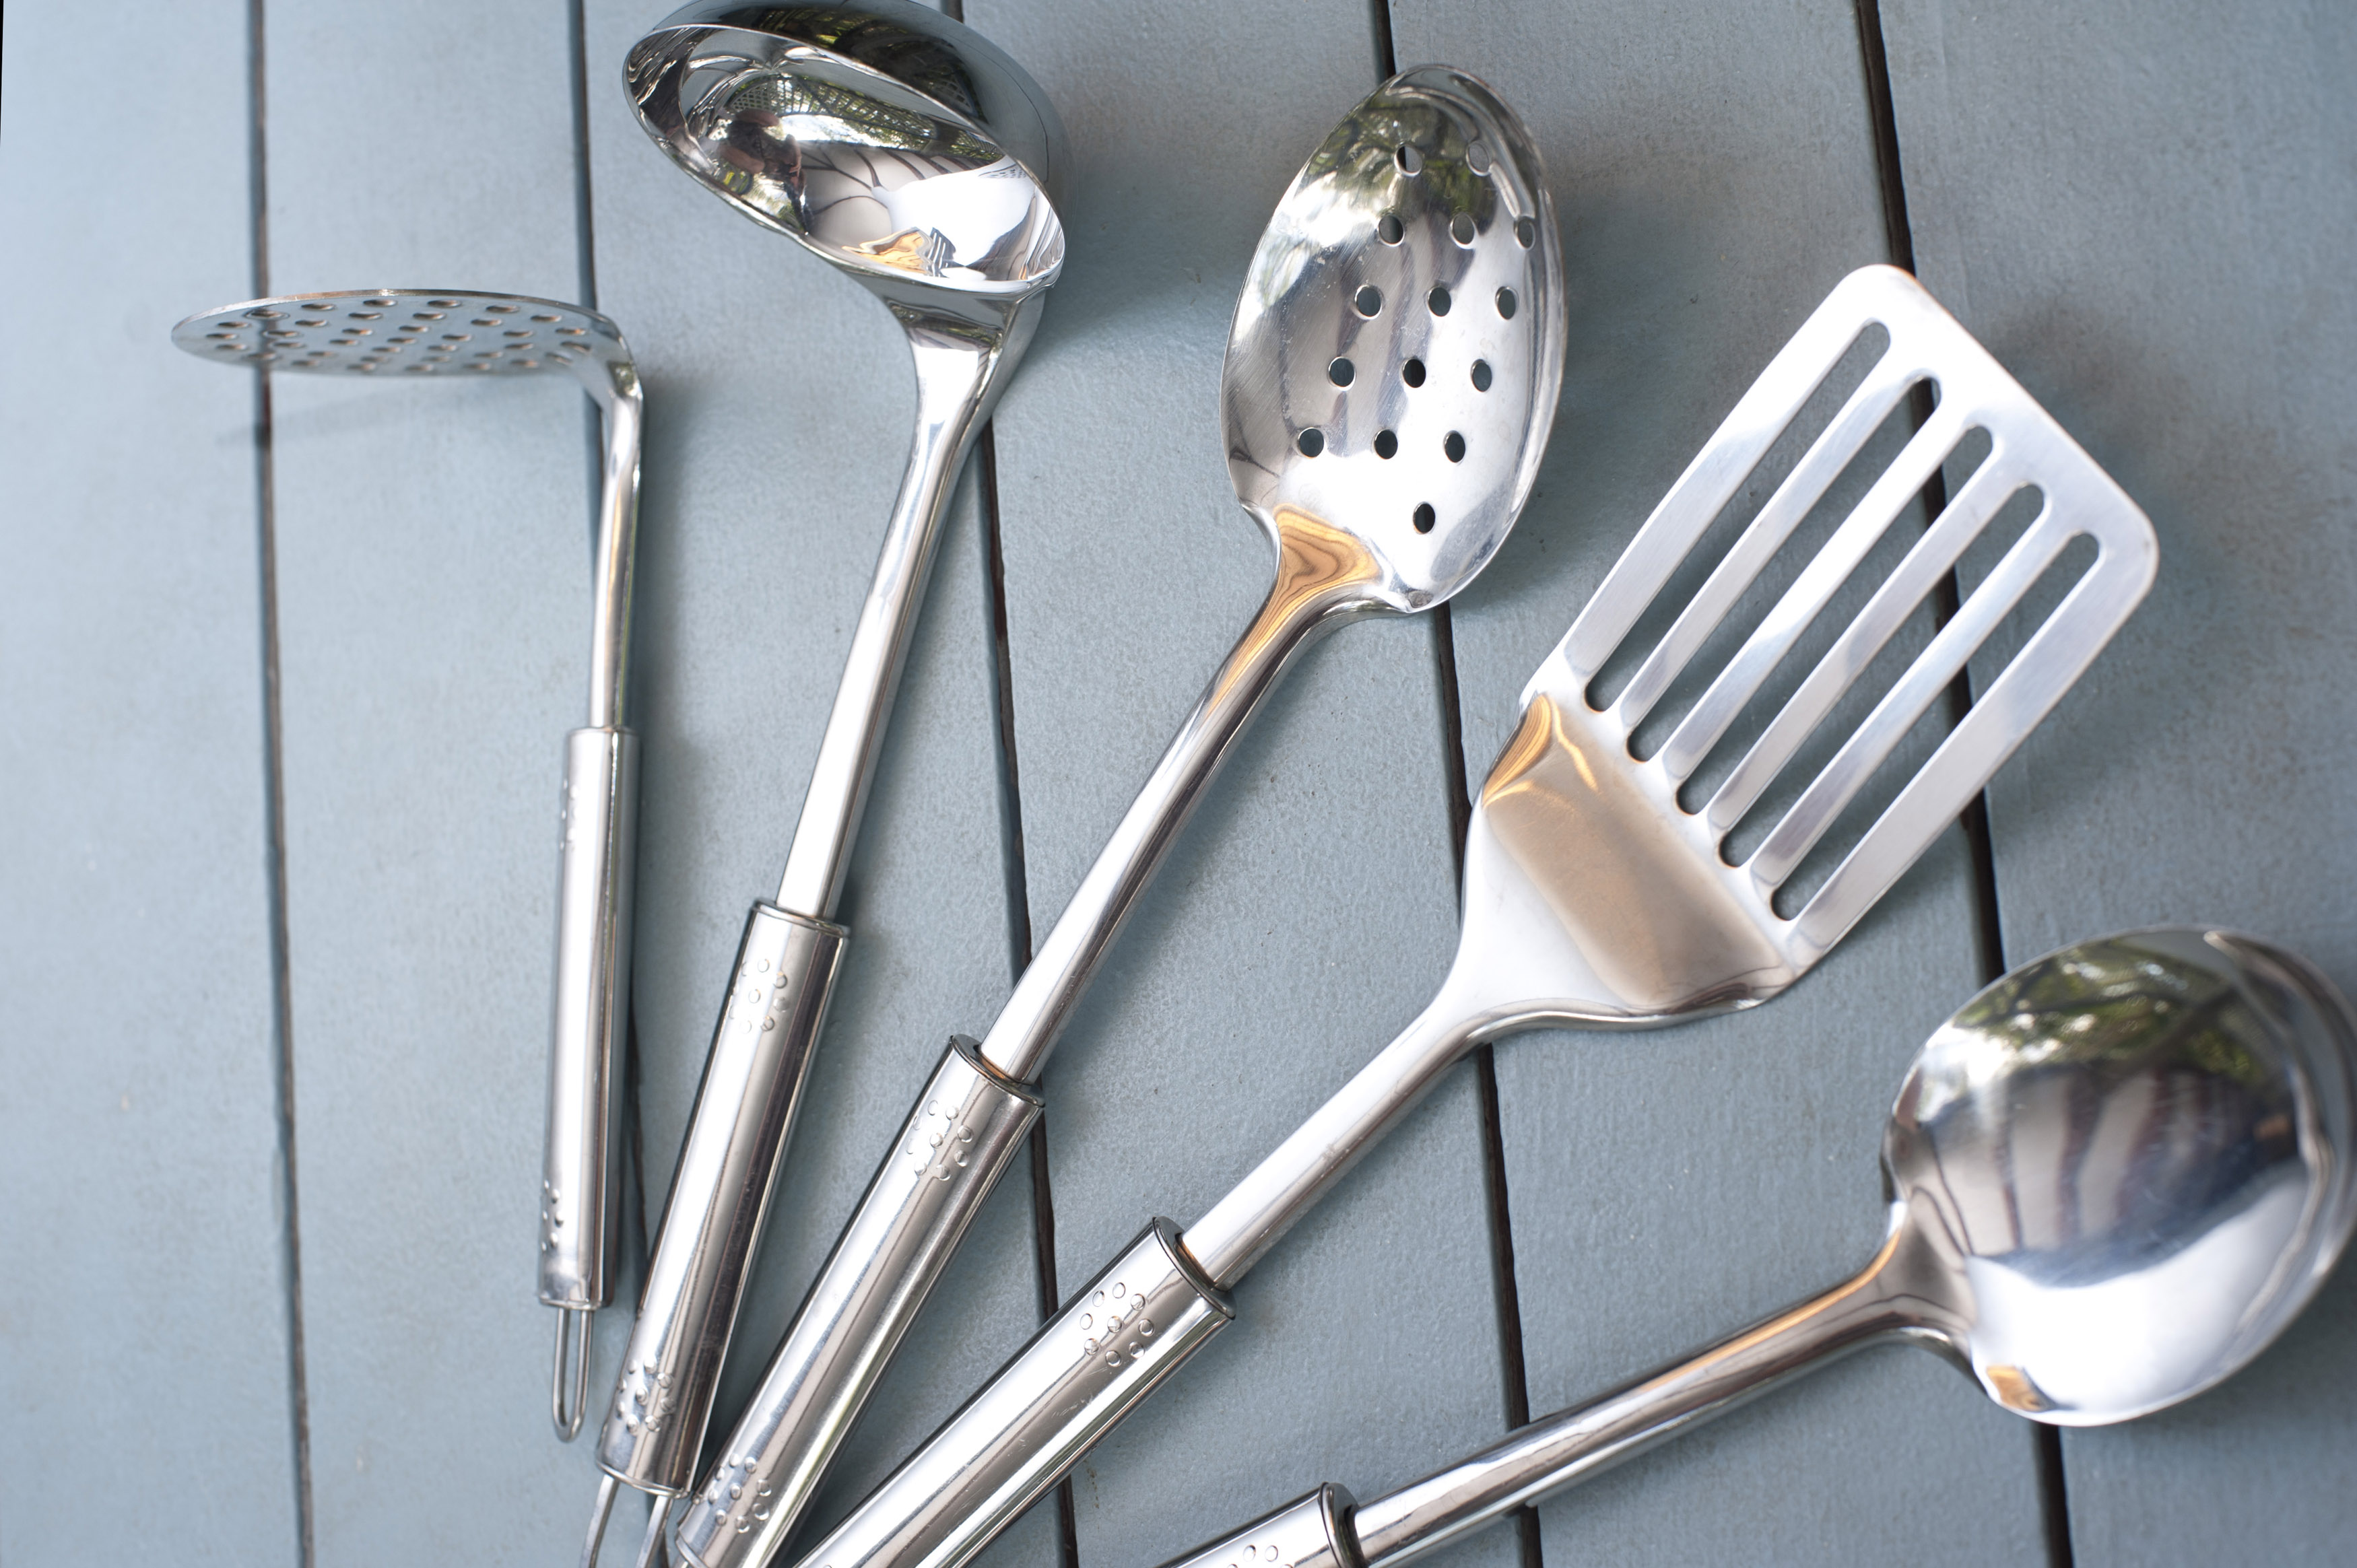 Free Stock Photo 17156 Set of stainless steel kitchen utensils